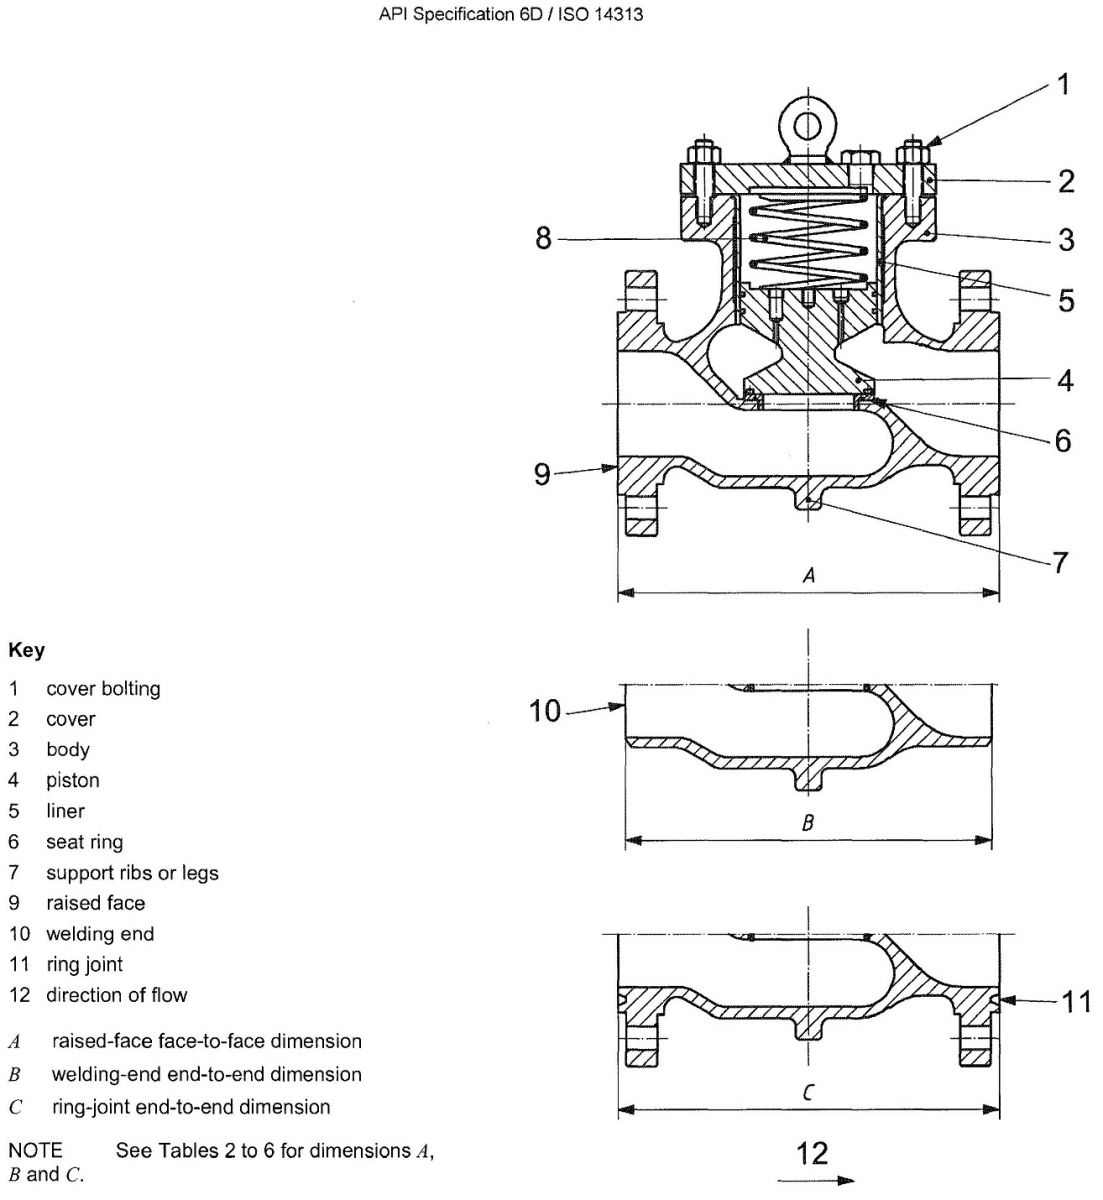 Piston check valve